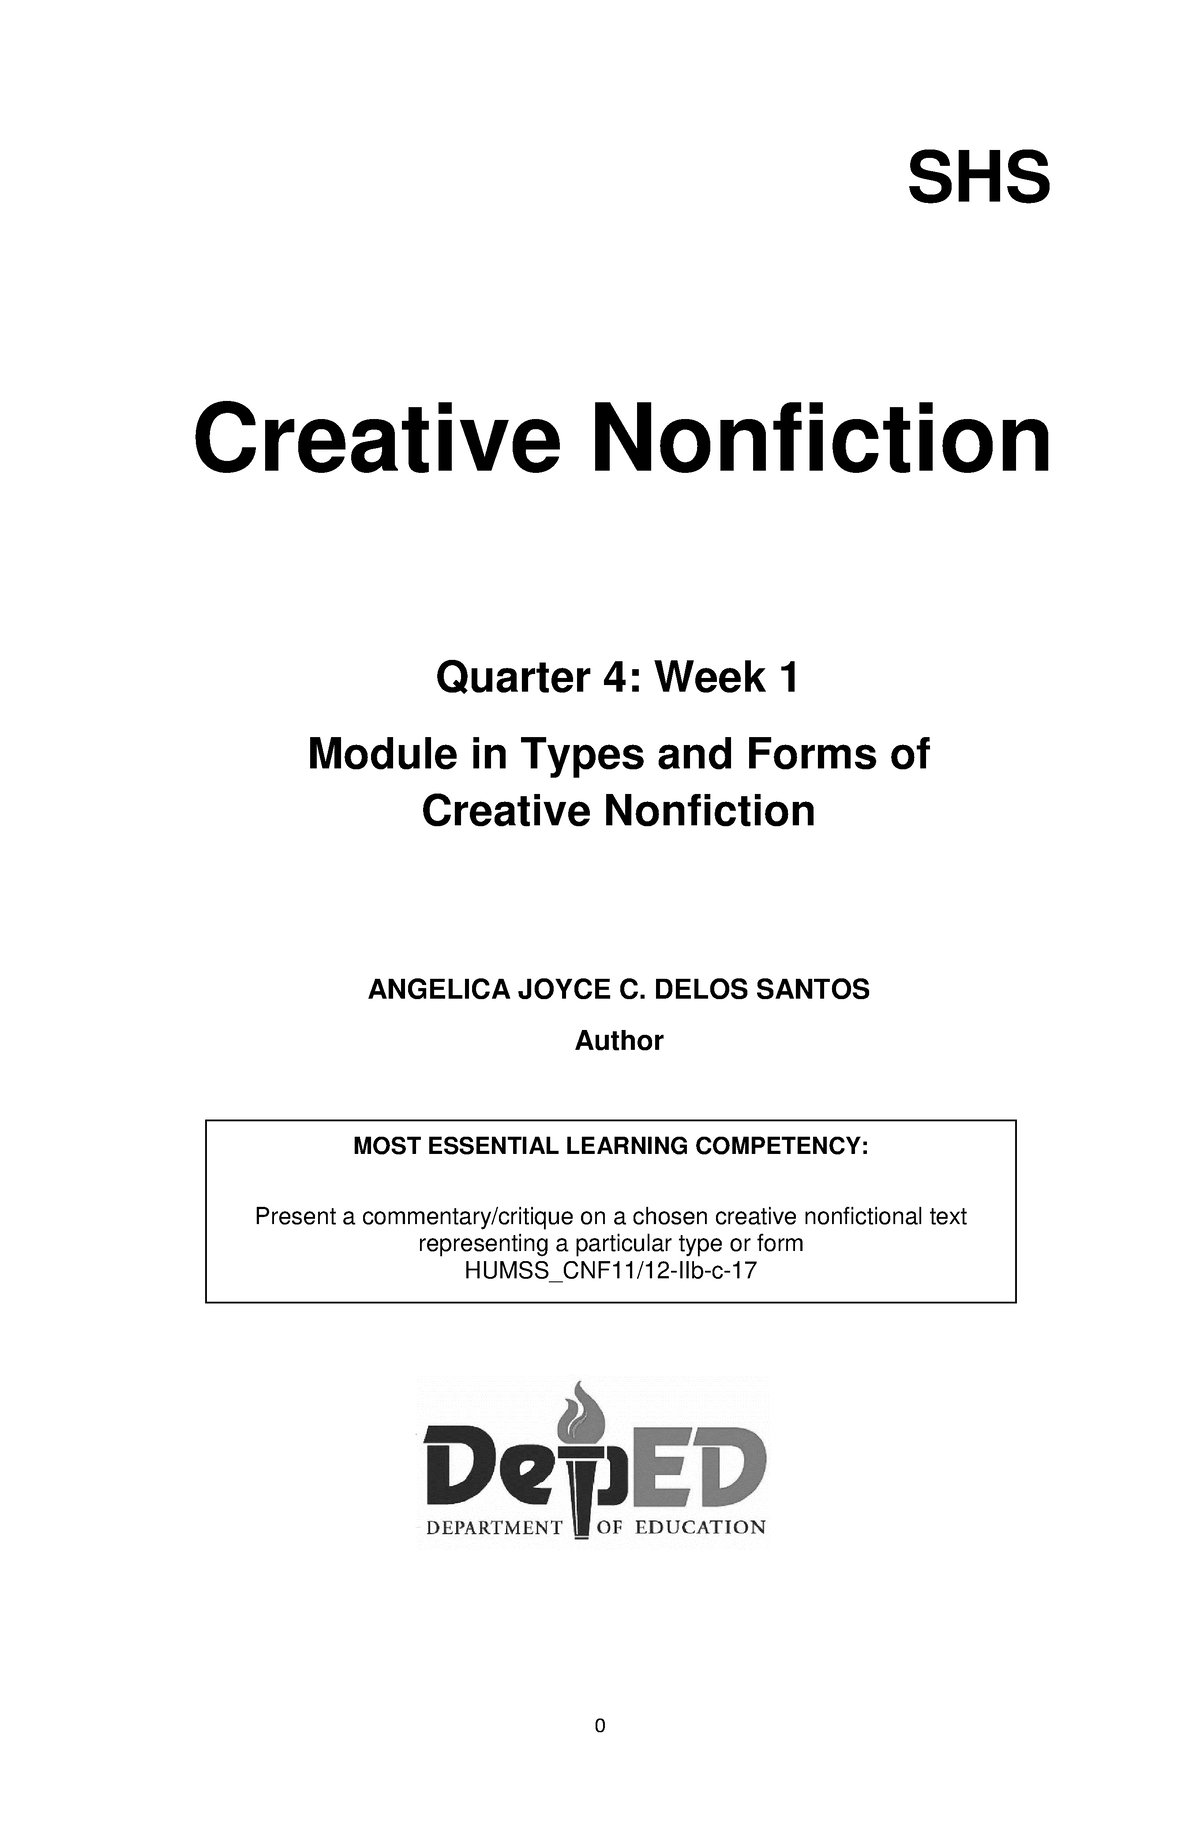 creative writing nonfiction module